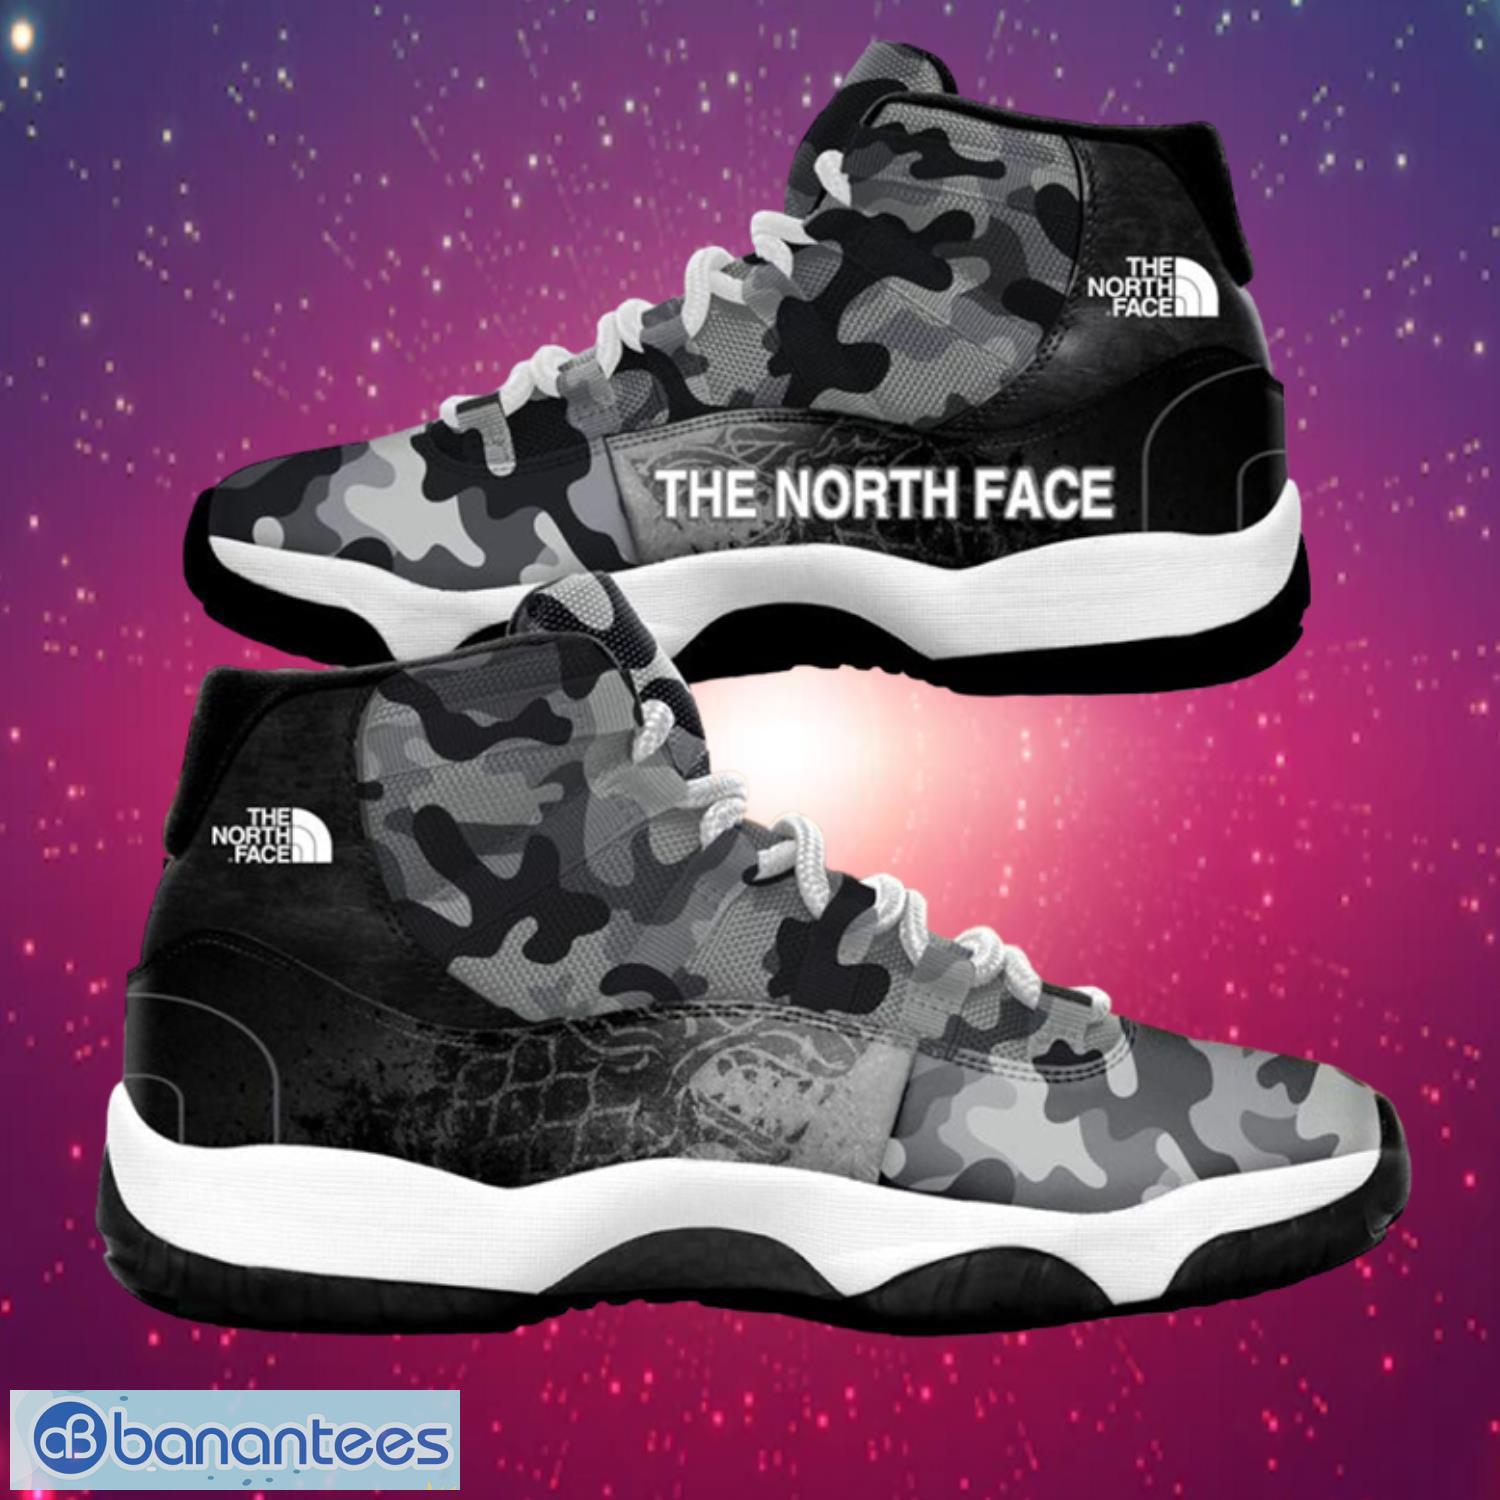 The North Face Camo Black Air Jordan 11 Shoes Product Photo 1